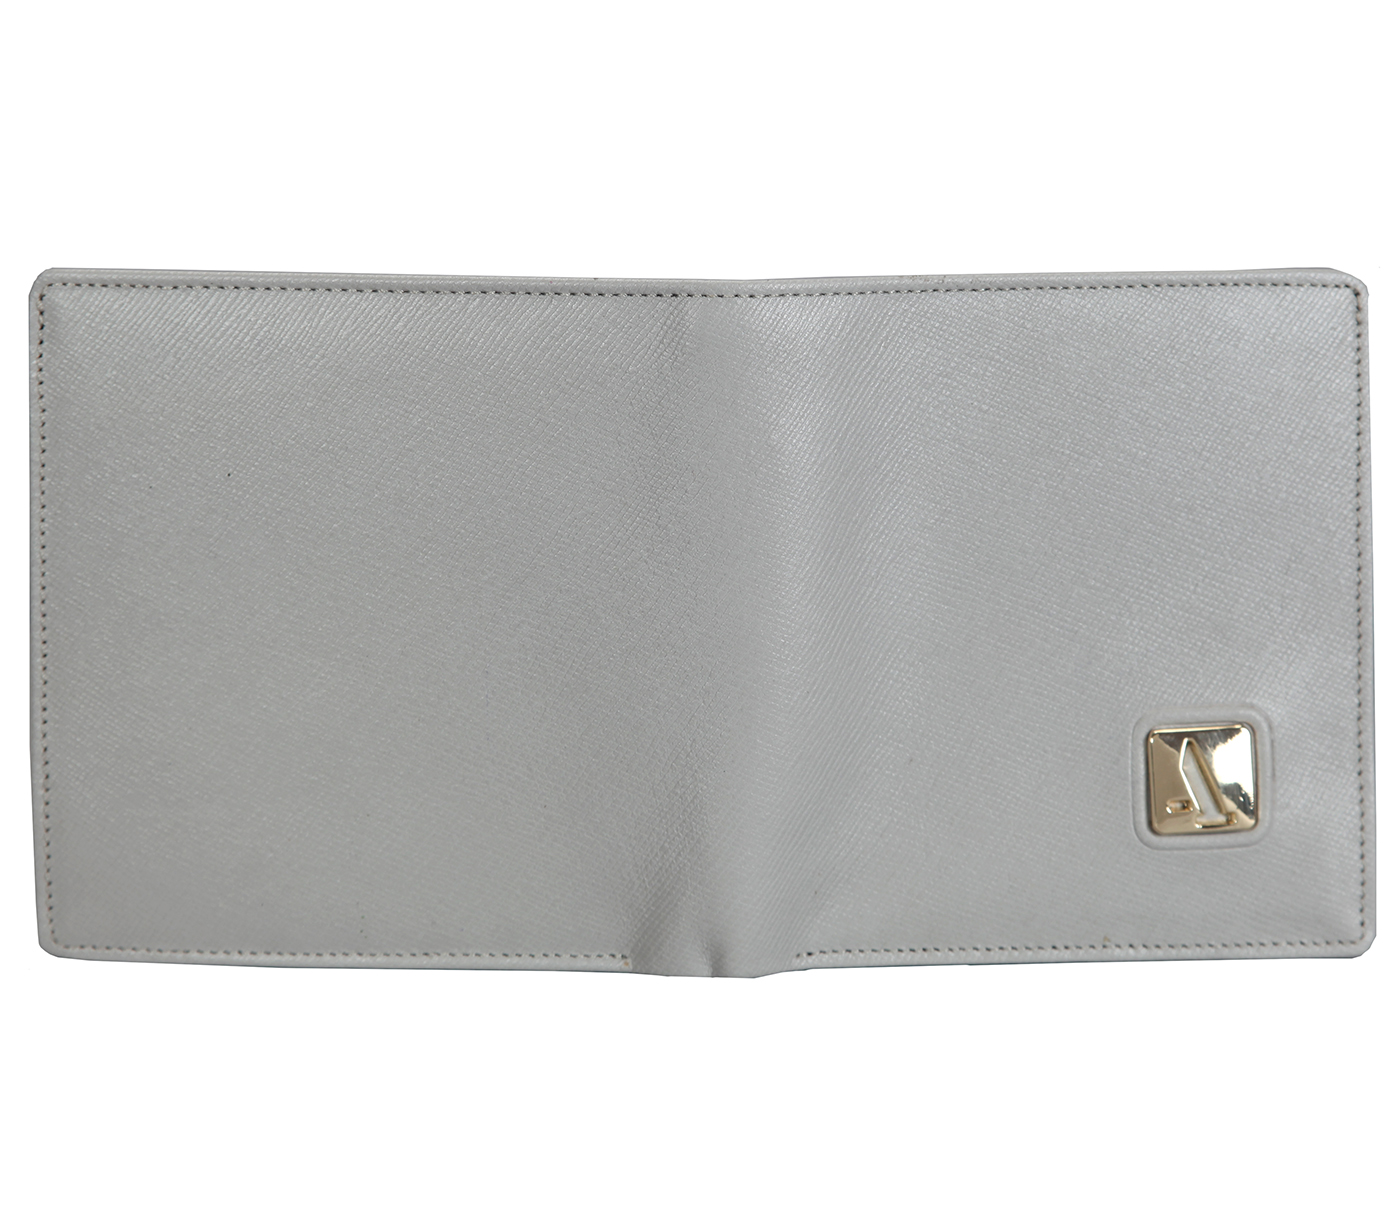 W318-Alabama-Women's bifold wallet in Genuine Leather - Grey/Black